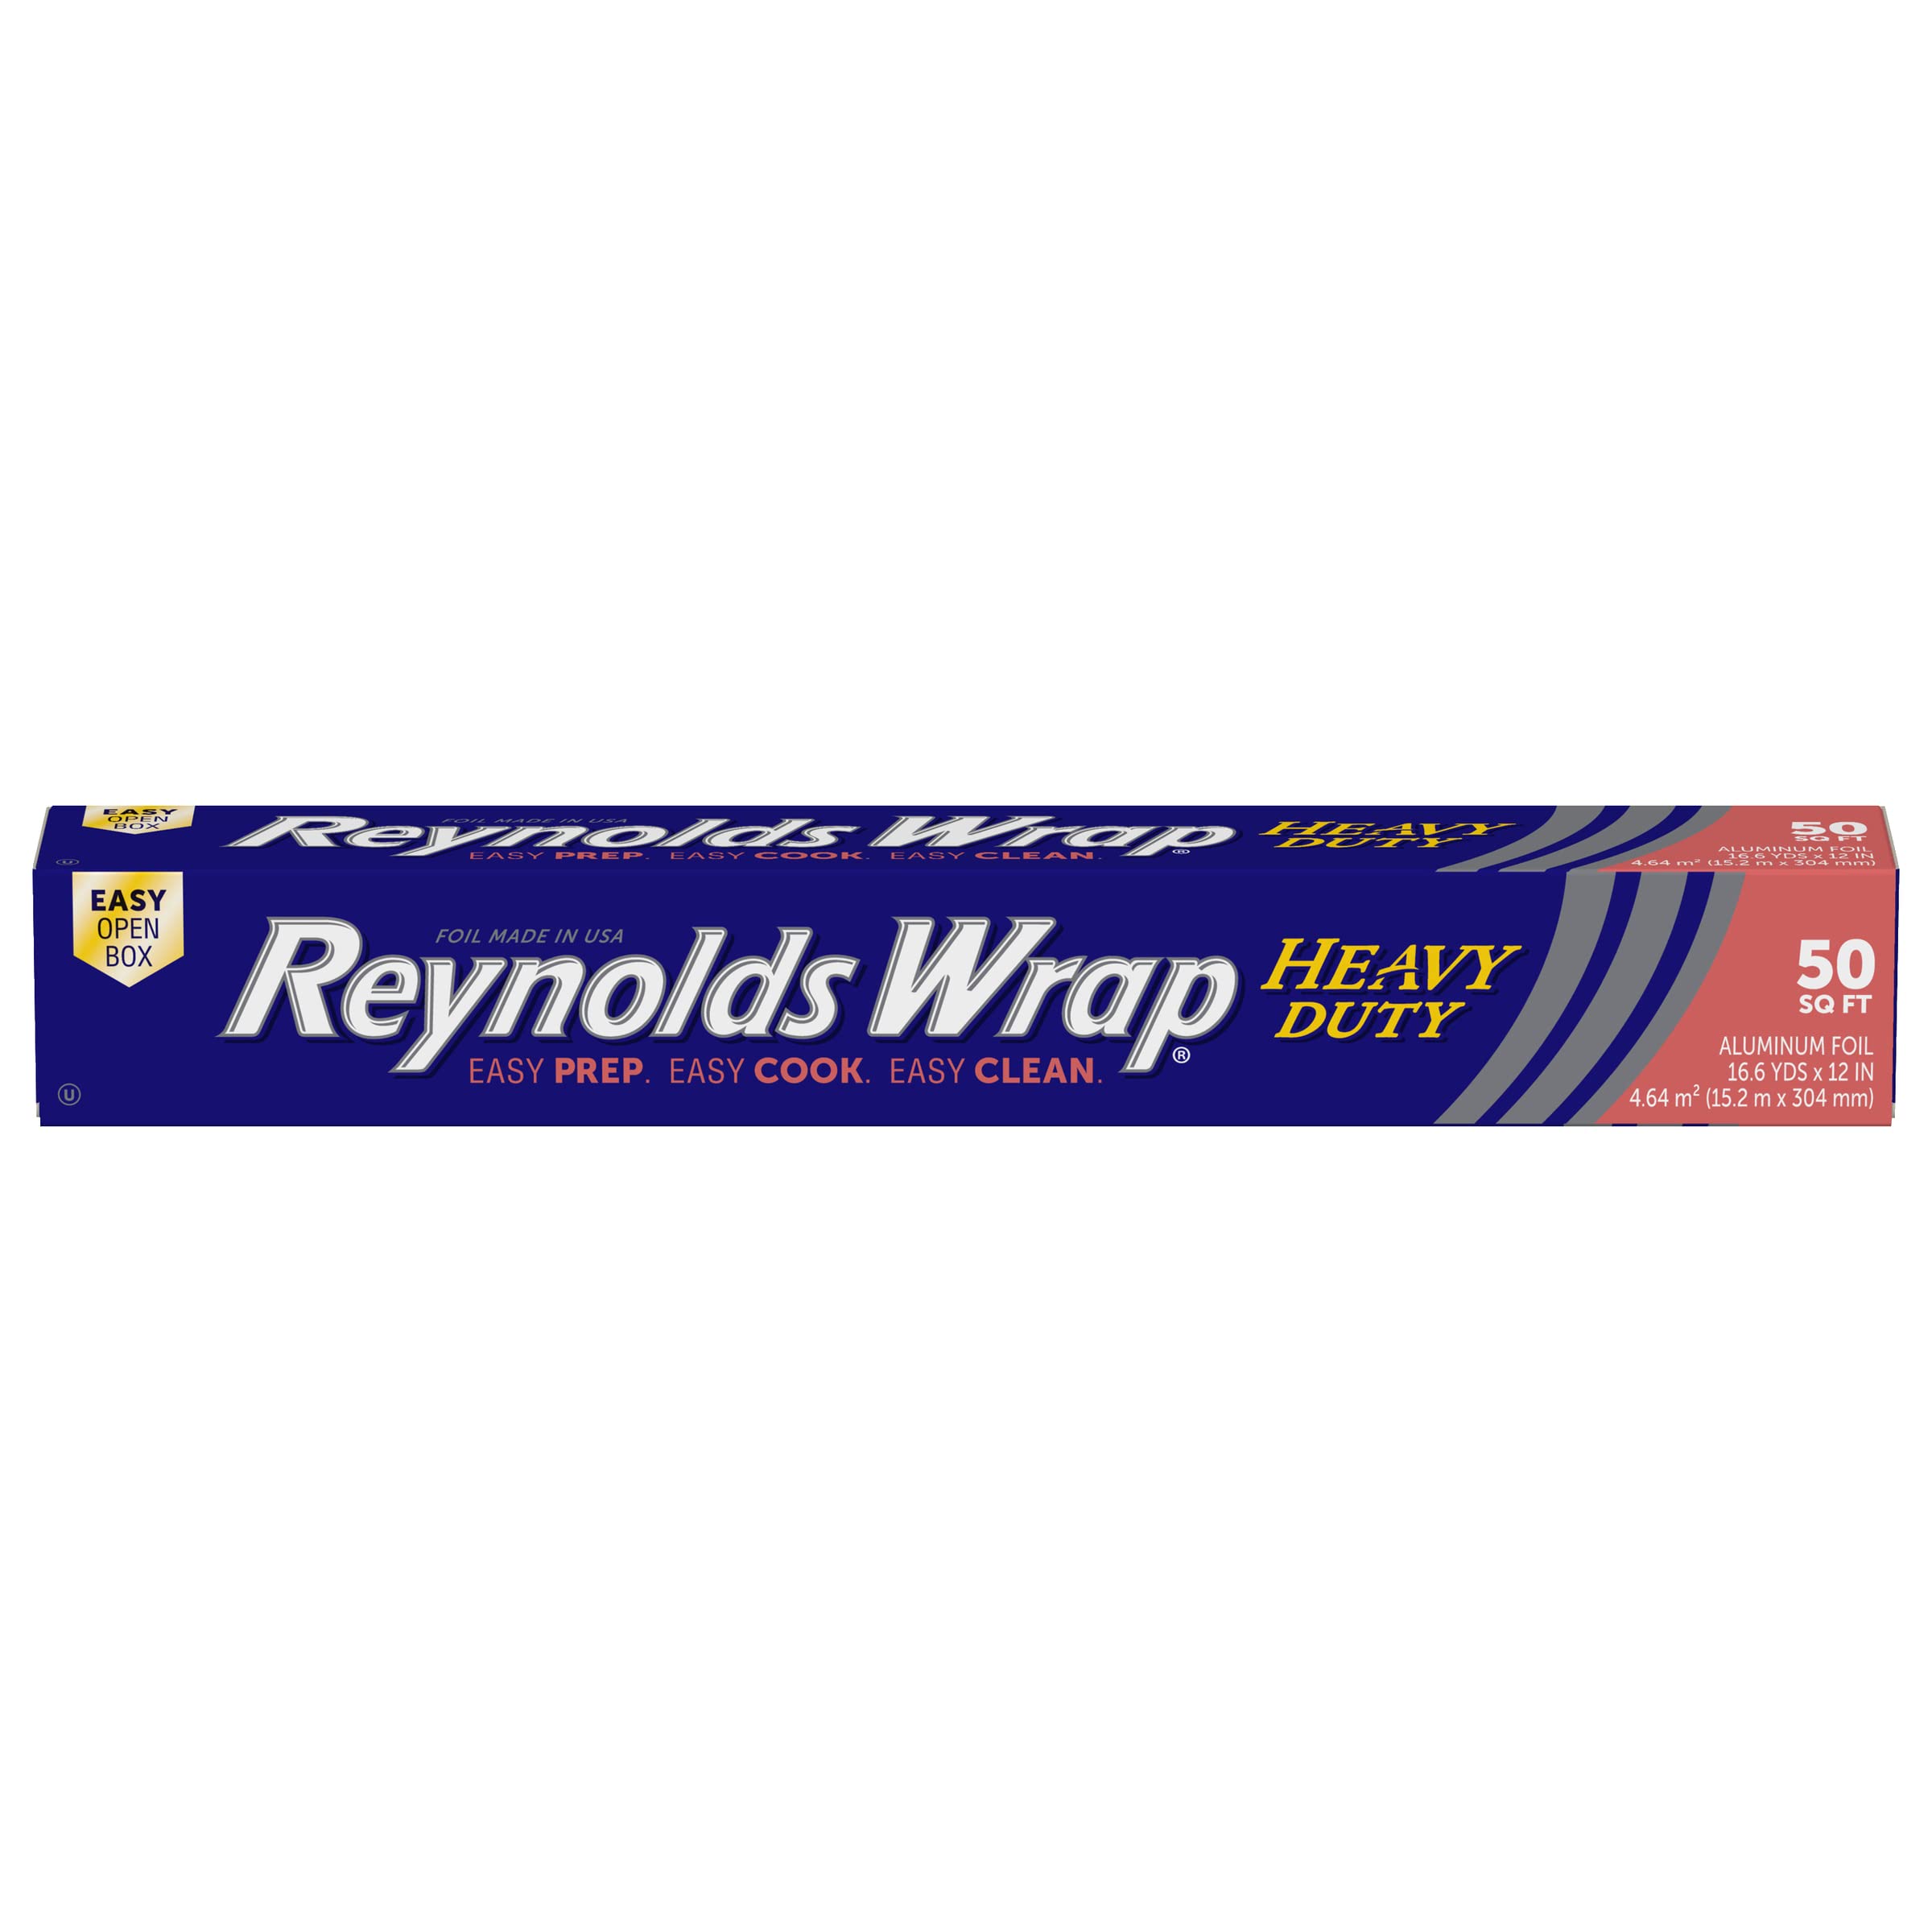 Reynolds Wrap Heavy Duty Aluminum Foil, 50 Square Feet - $4.48 or less (FS w/Prime)